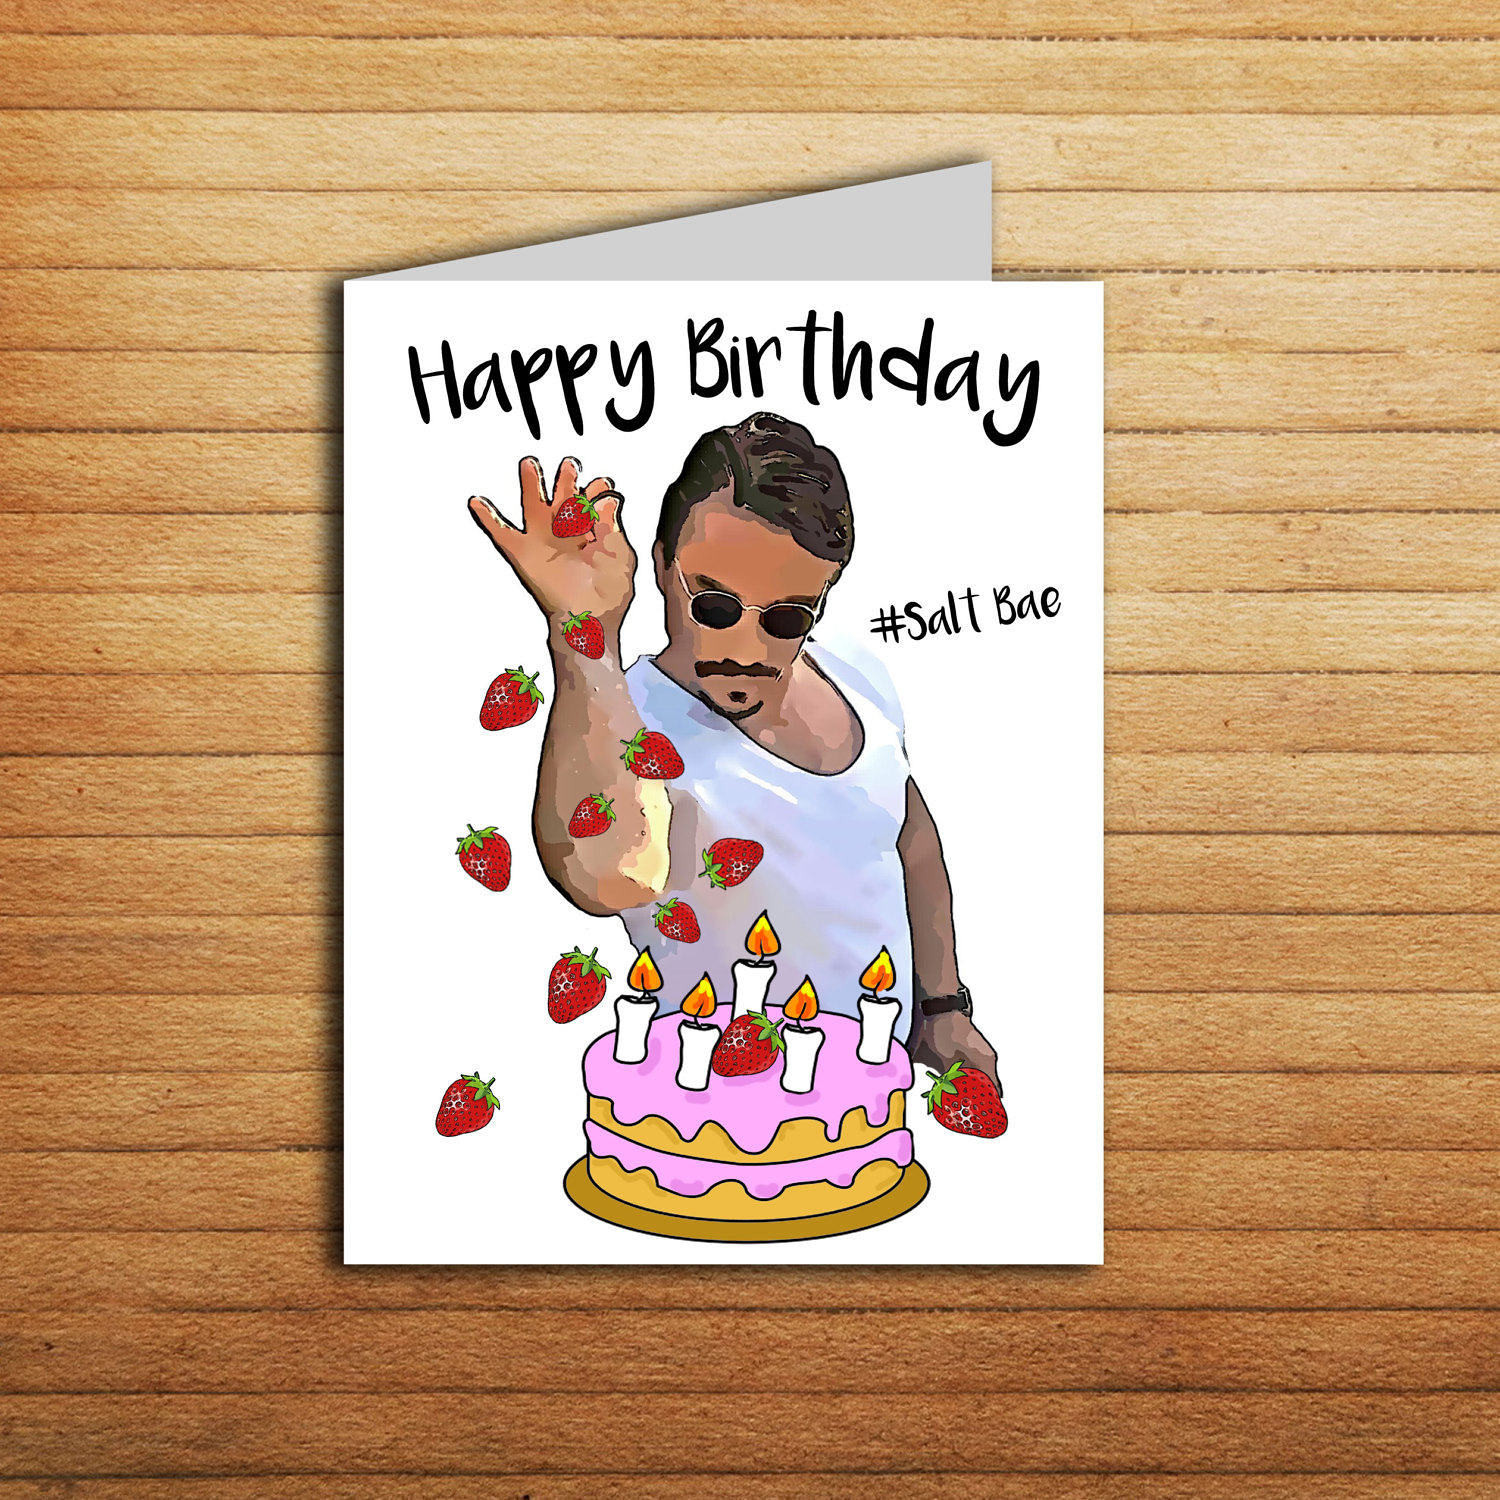 Free Printable Birthday Cards Funny
 Salt Bae Birthday Card Printable Funny Birthday Card for